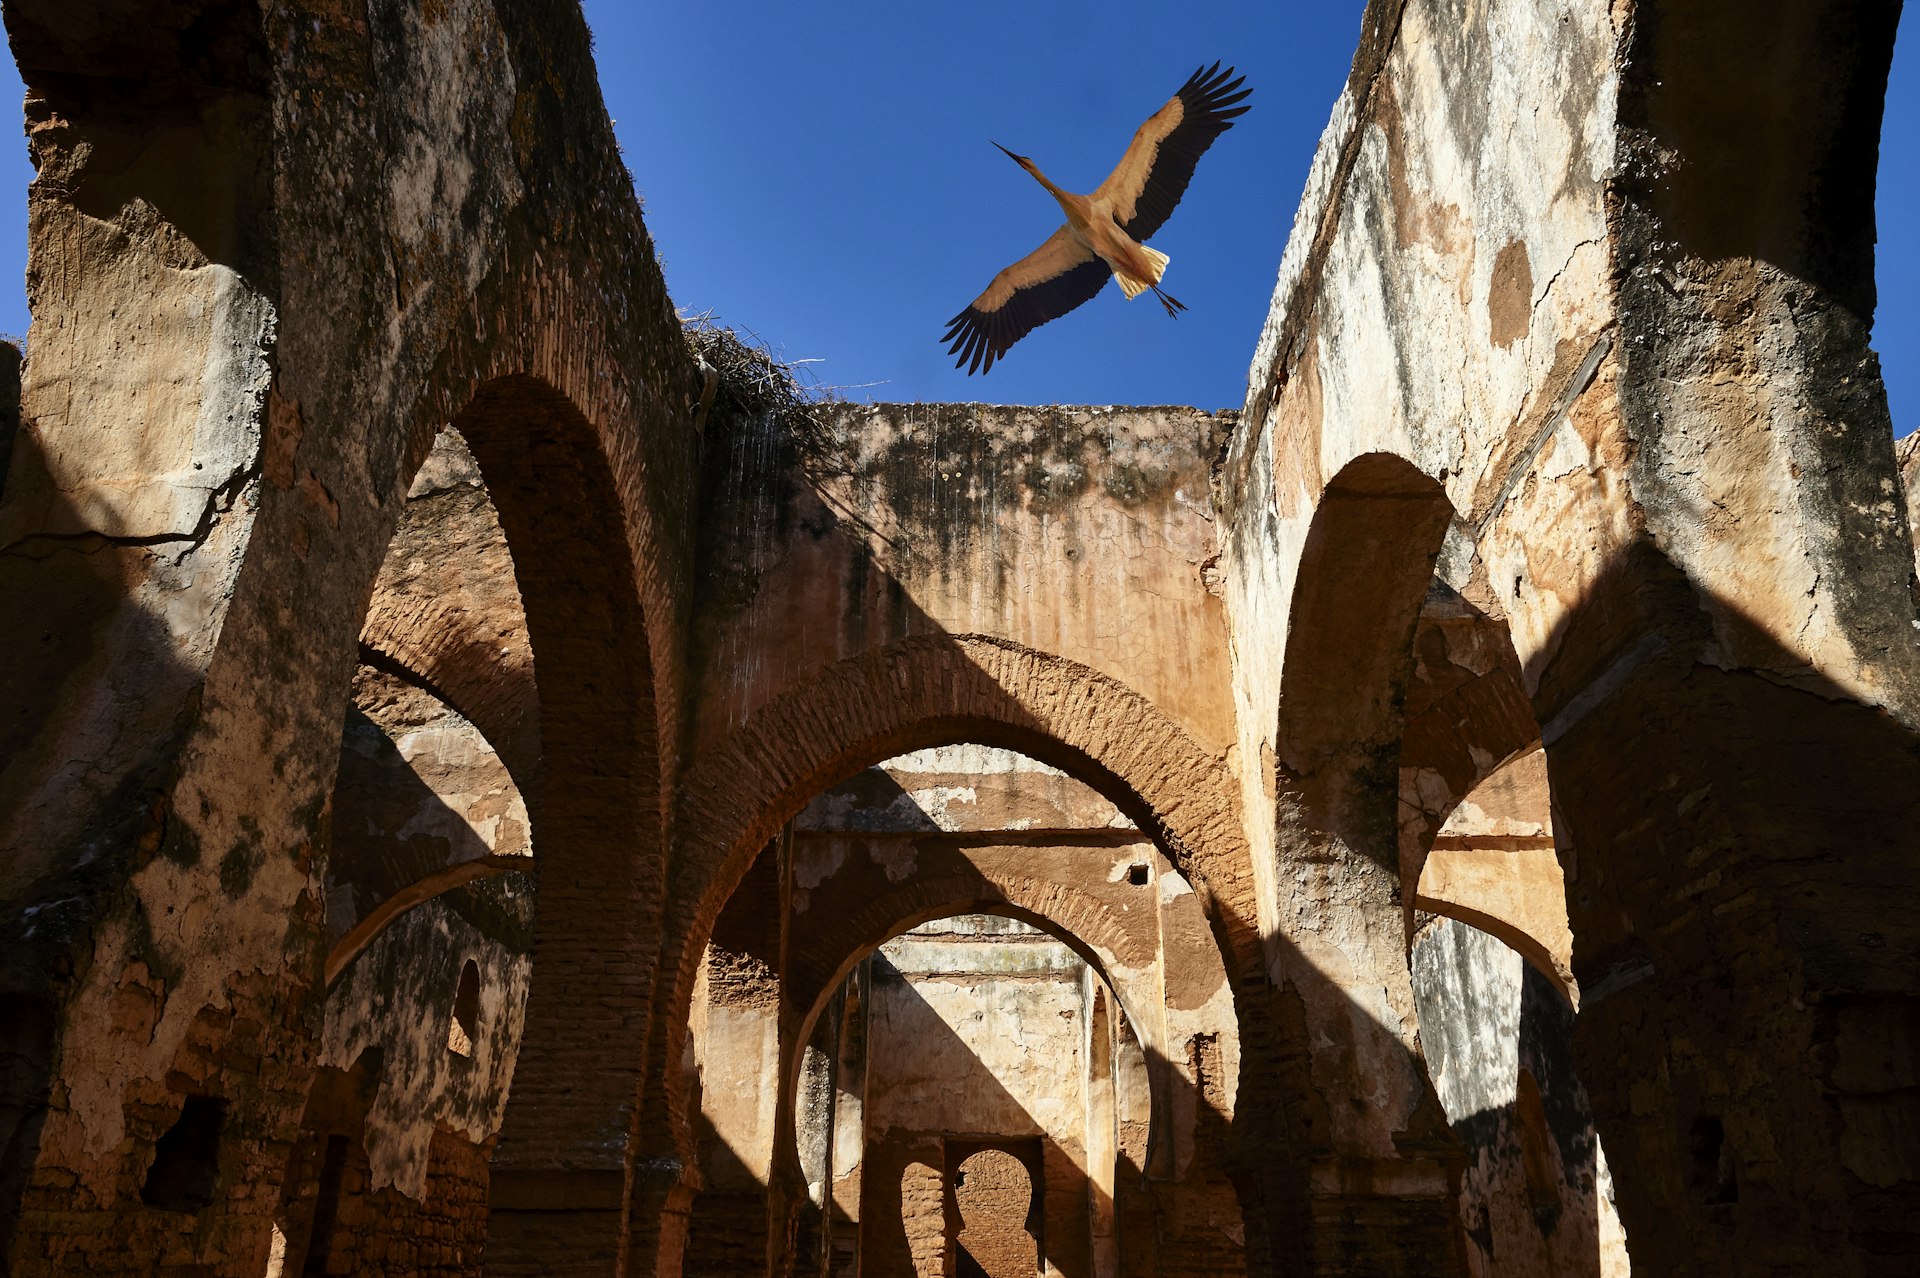 A stork flies over the historic Chellah Necropolis in Rabat, Morocco